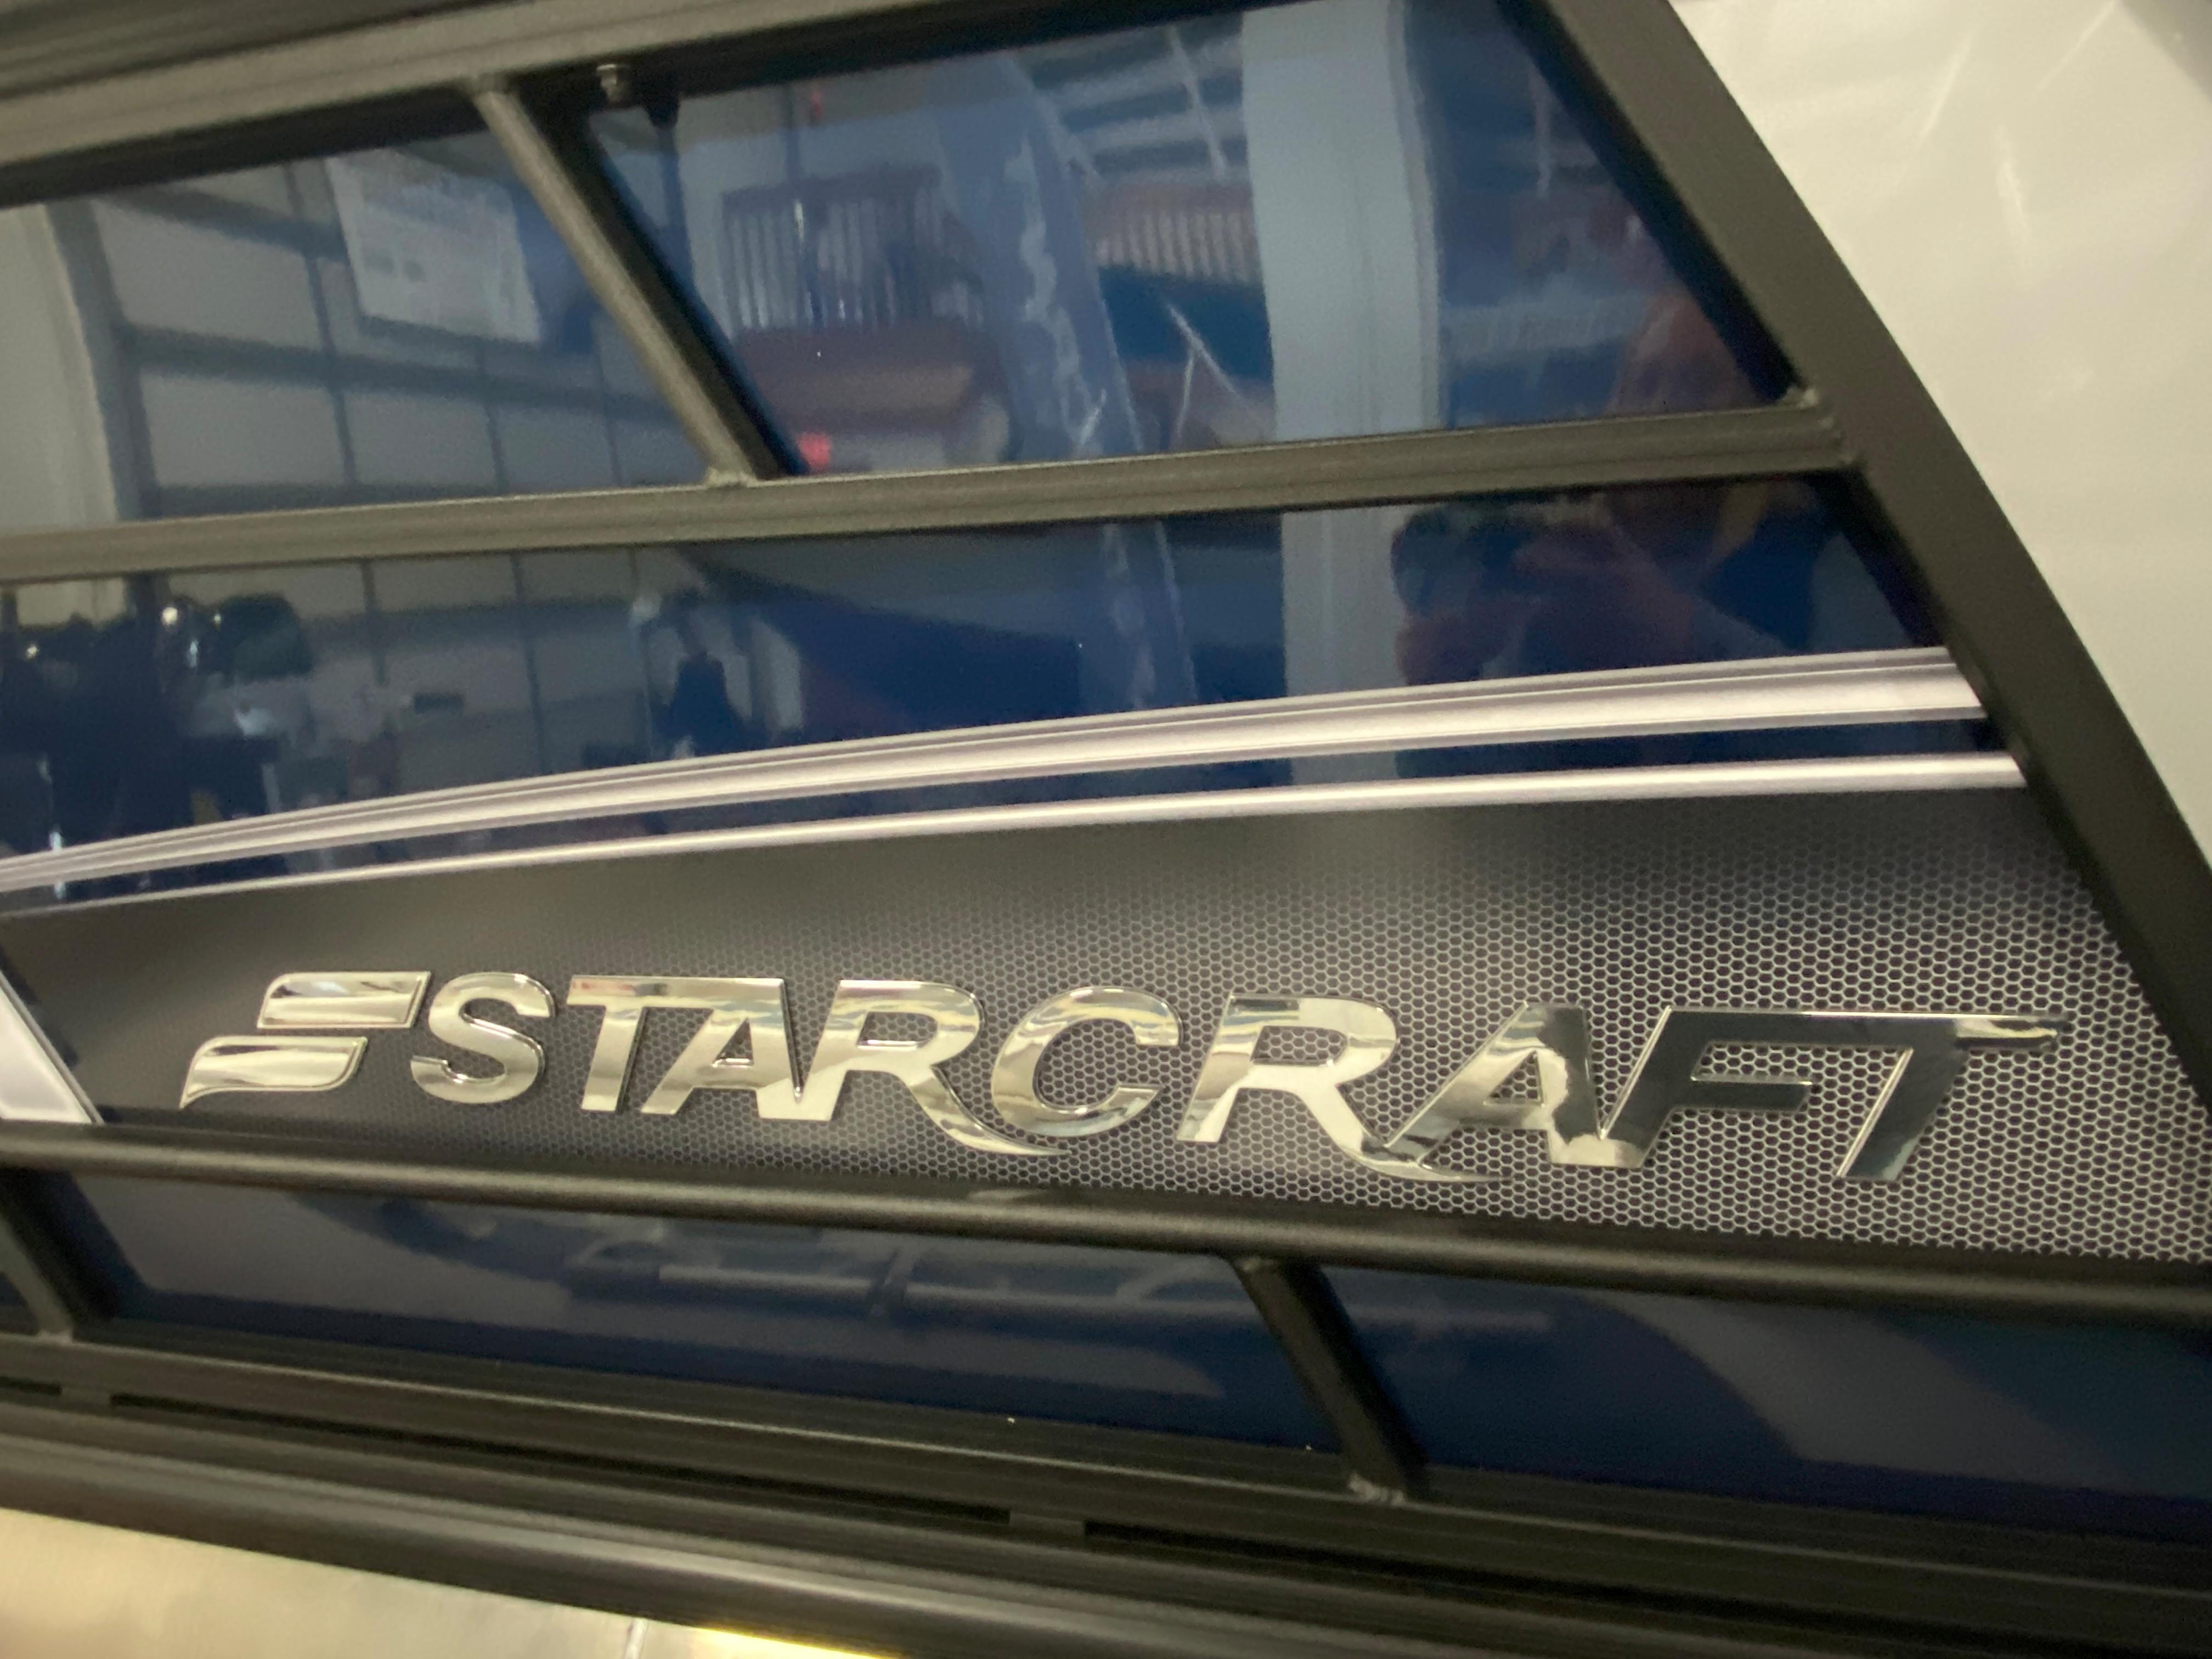 2023 Starcraft EXS-3